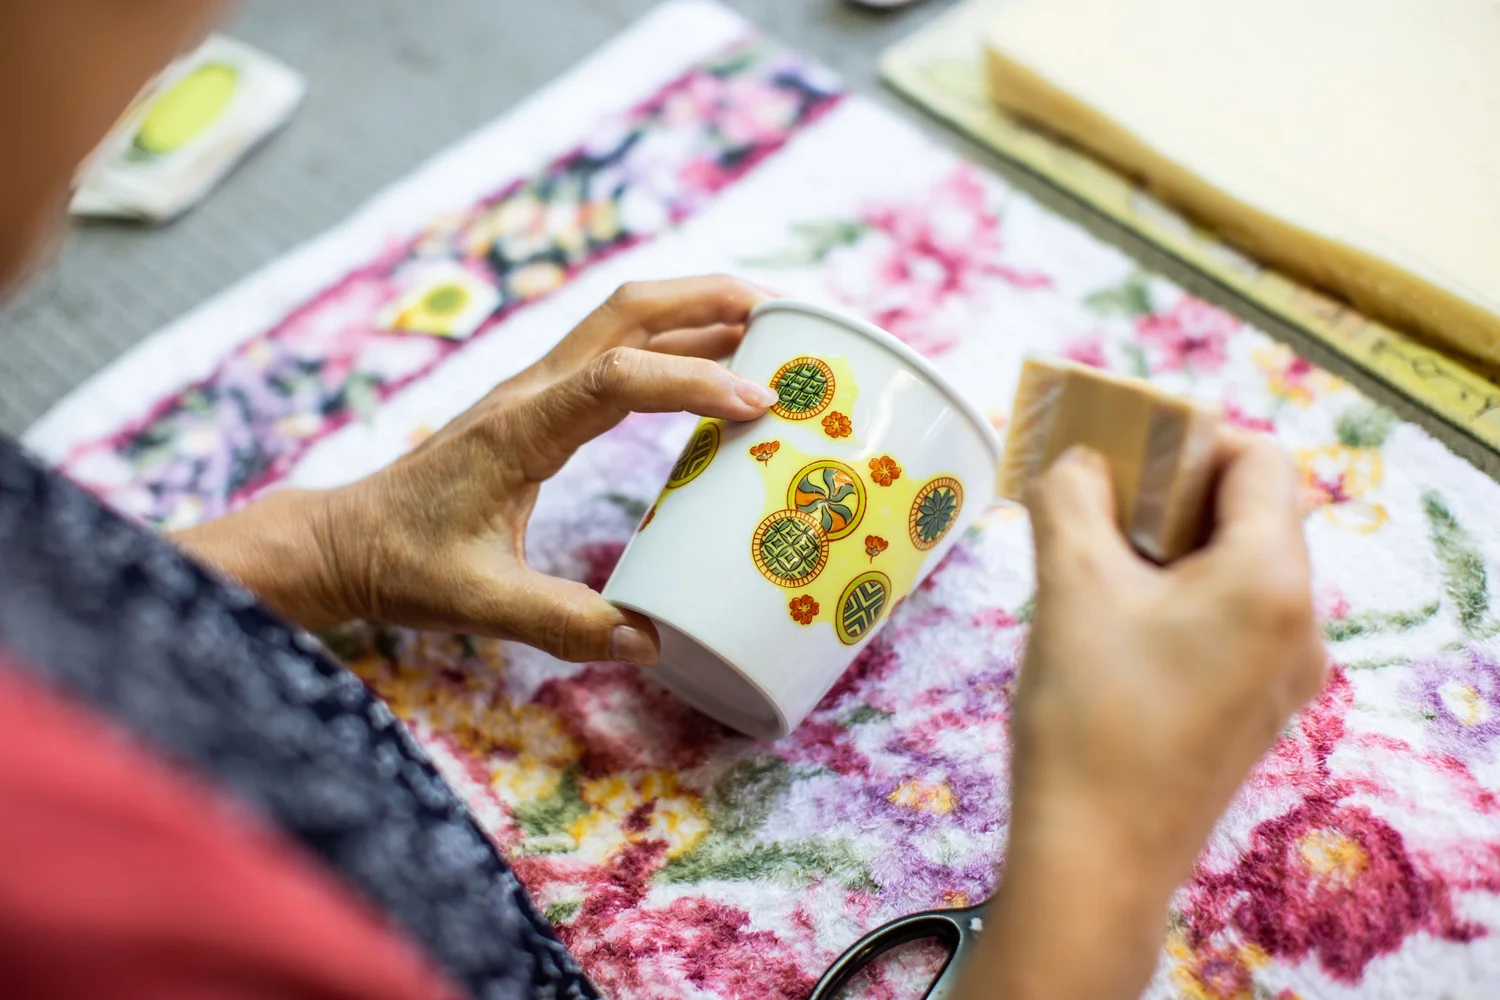 Add Your Own Unique Design to an Arita Porcelain Coffee Mug